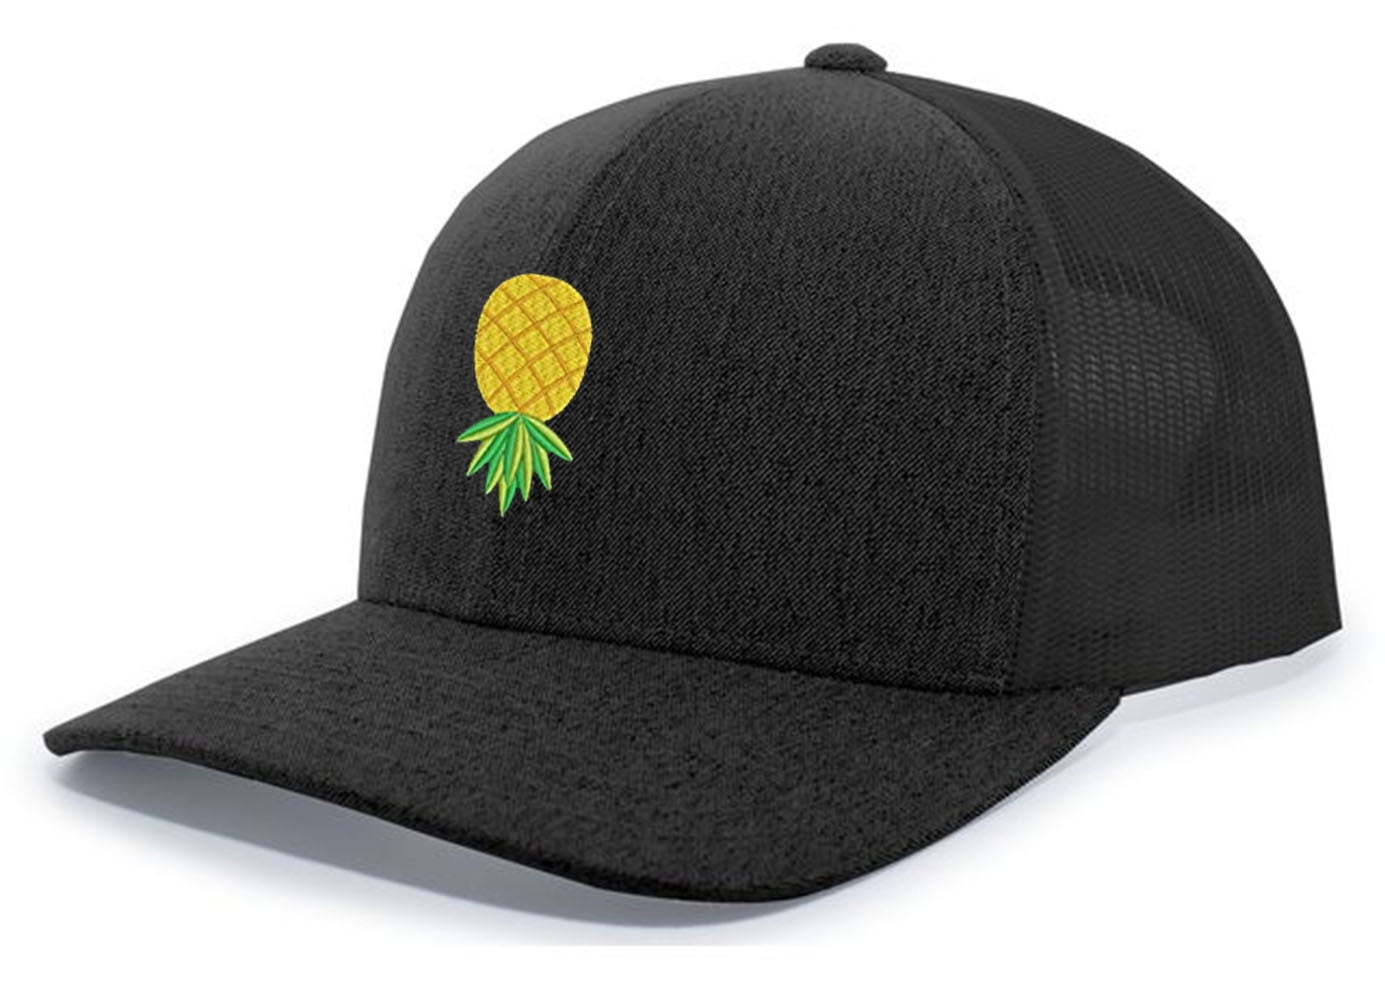 Mens Pineapple Embroidered Mesh Back Trucker Hat Cap-Black Heather